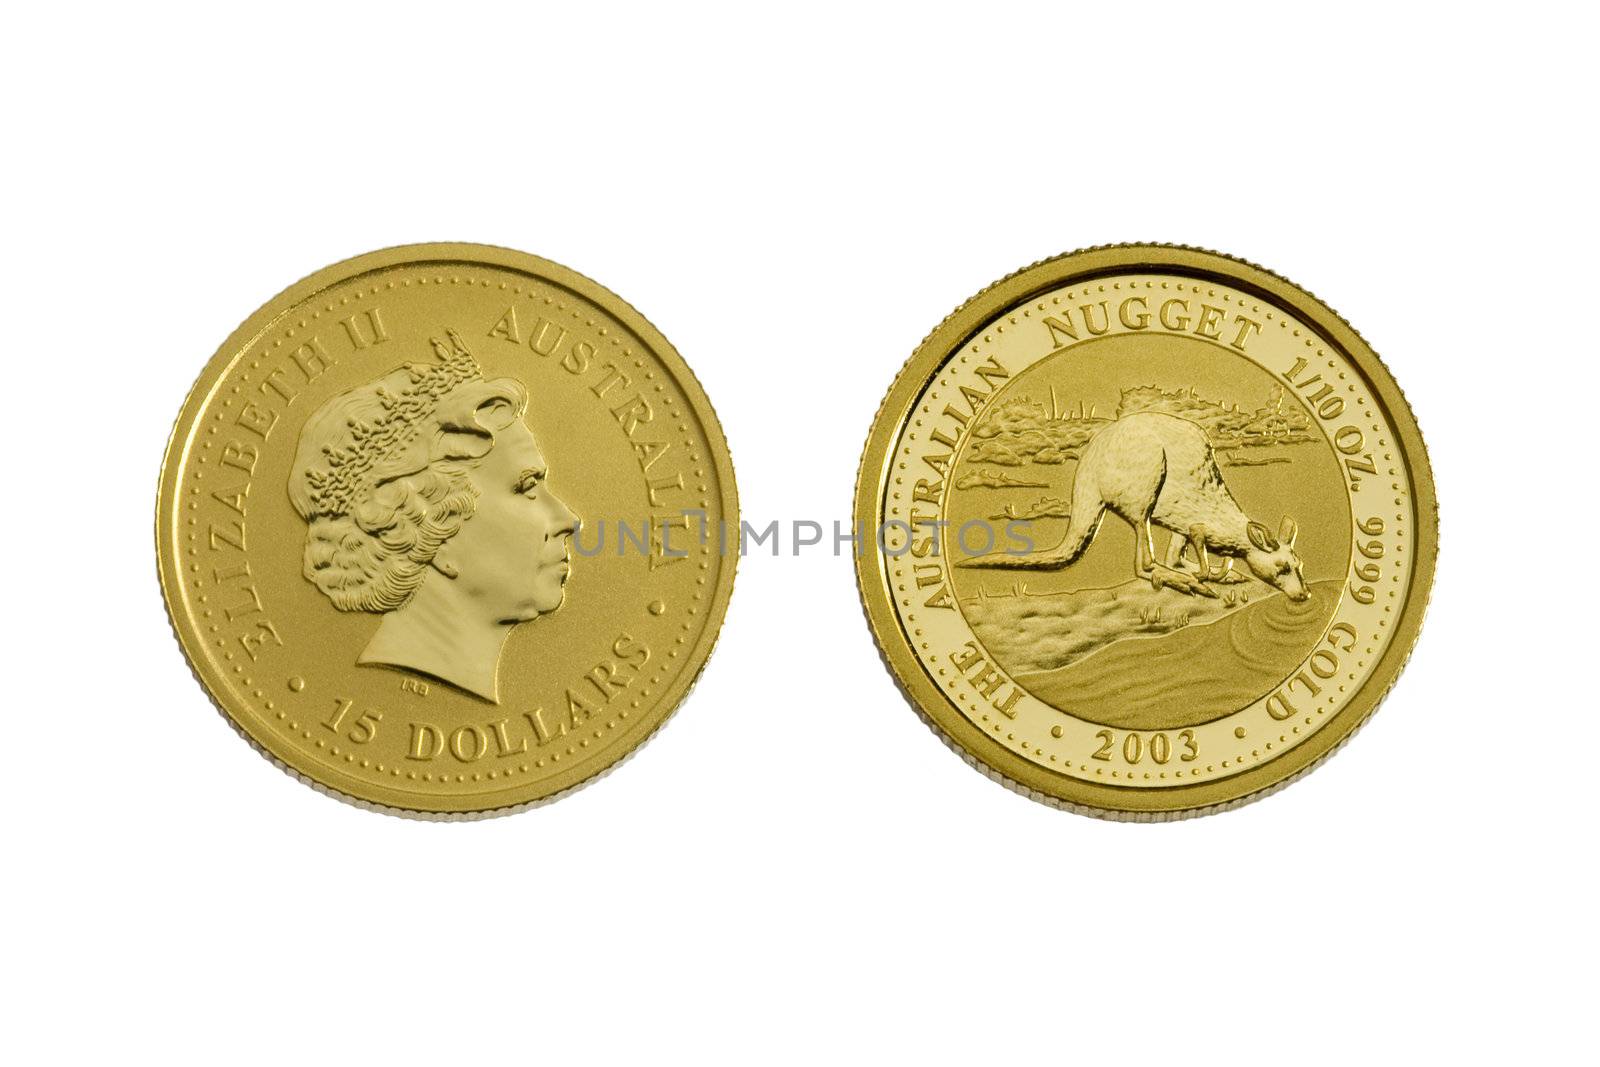 fifteen australian dollars (gold) by Sazonoff